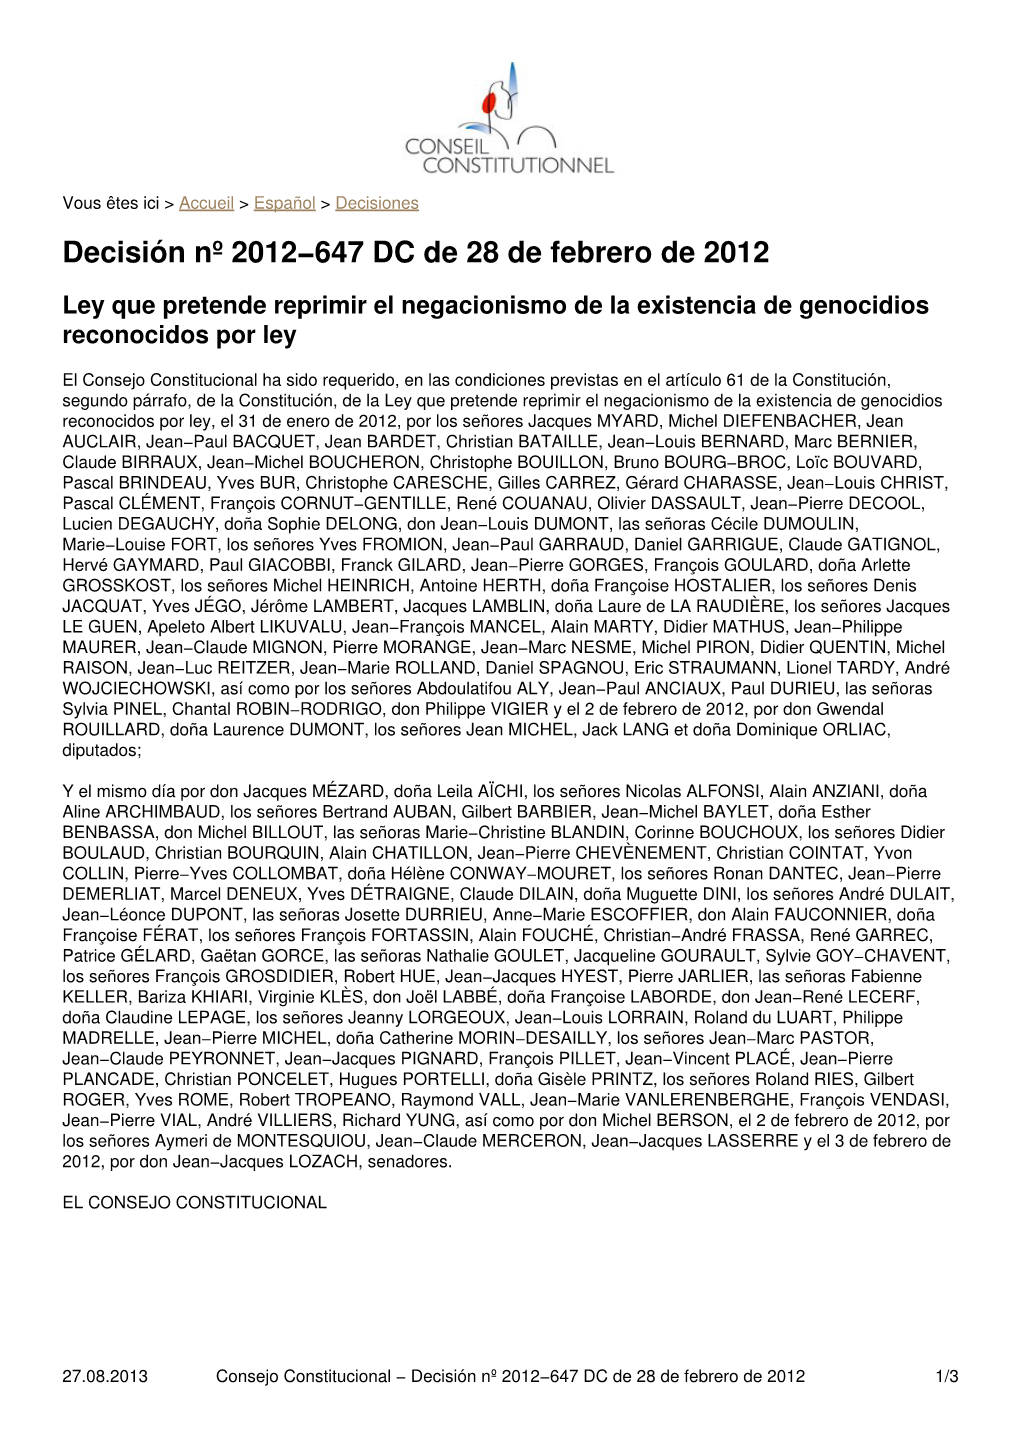 Decisión Nº 2012-647 DC De 28 De Febrero De 2012